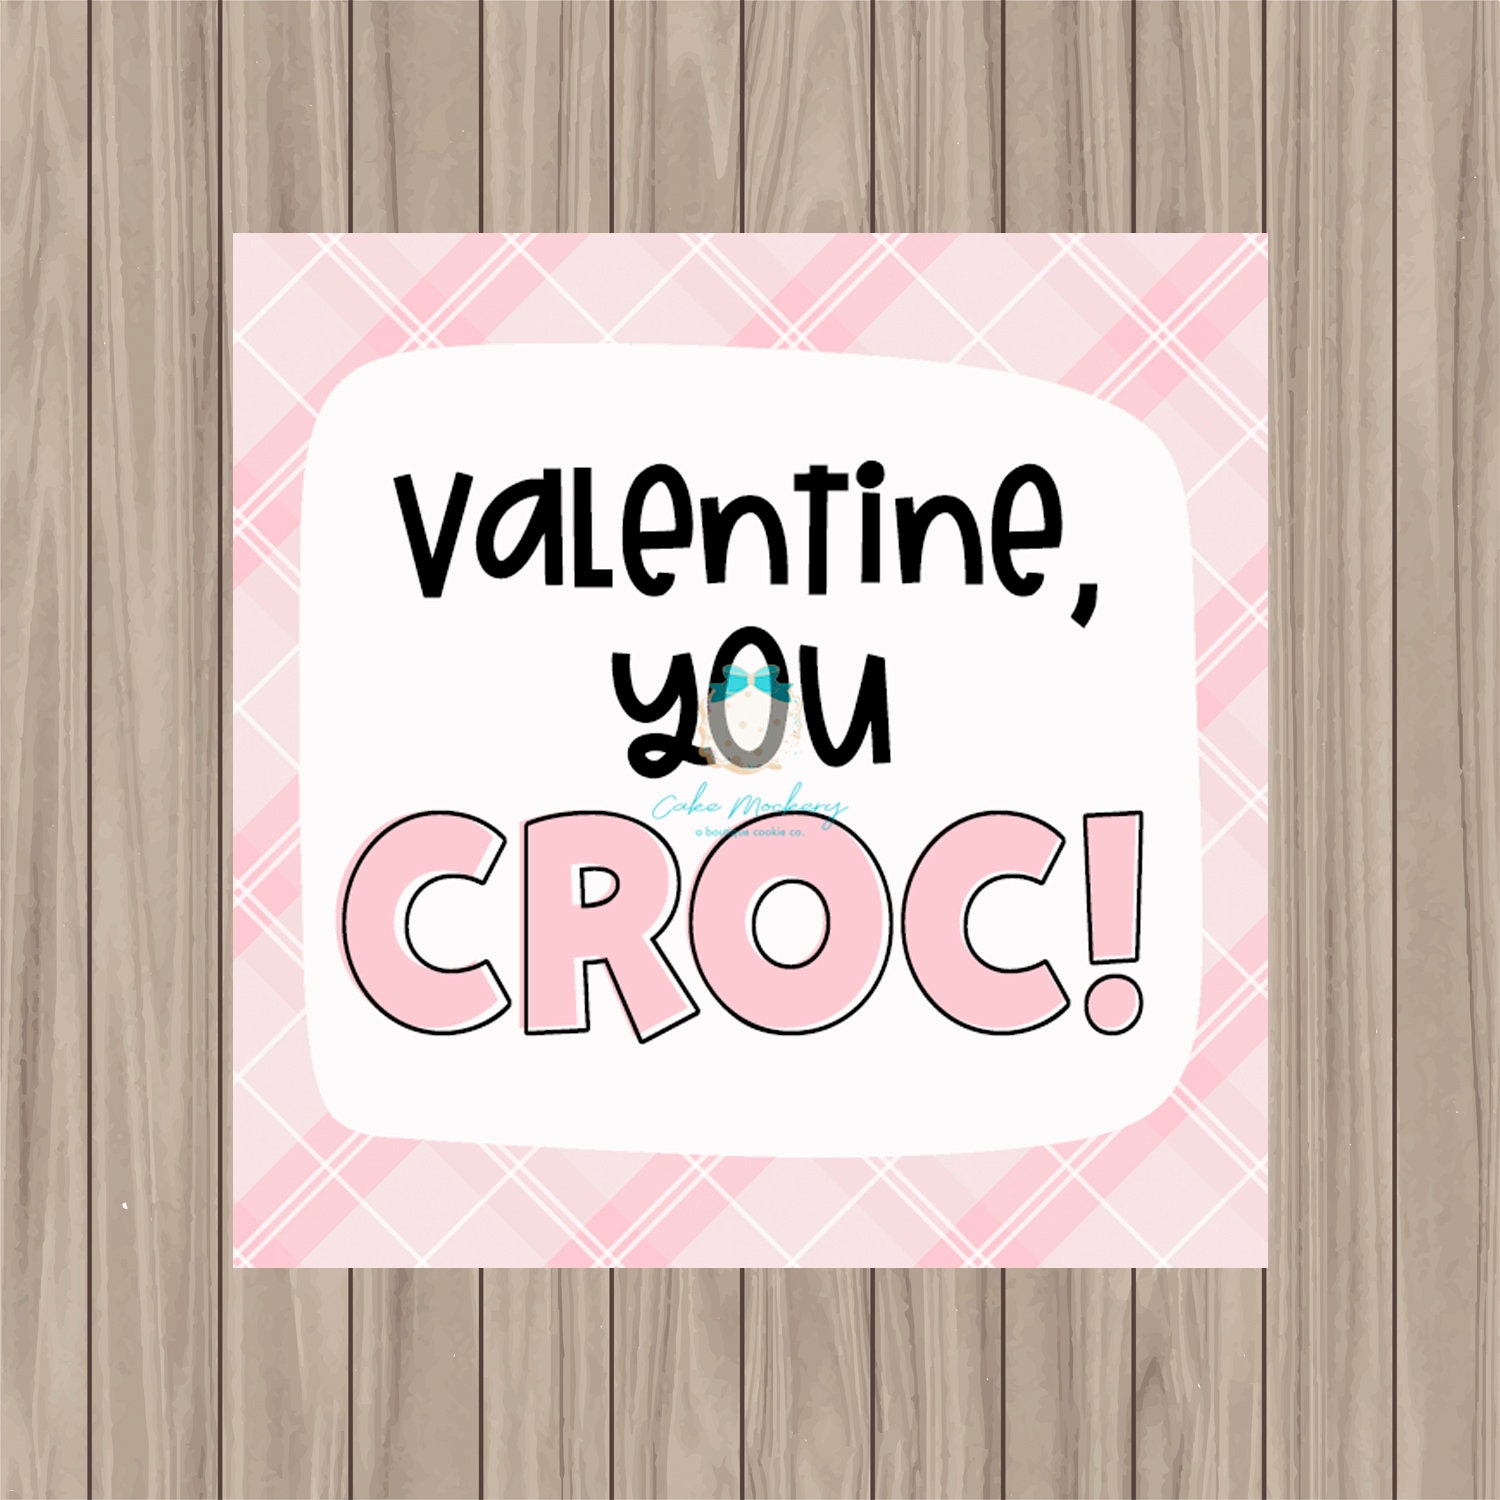 Valentine Croc Charms #beadtok #nativebeadwork #nativebeader #nativeti